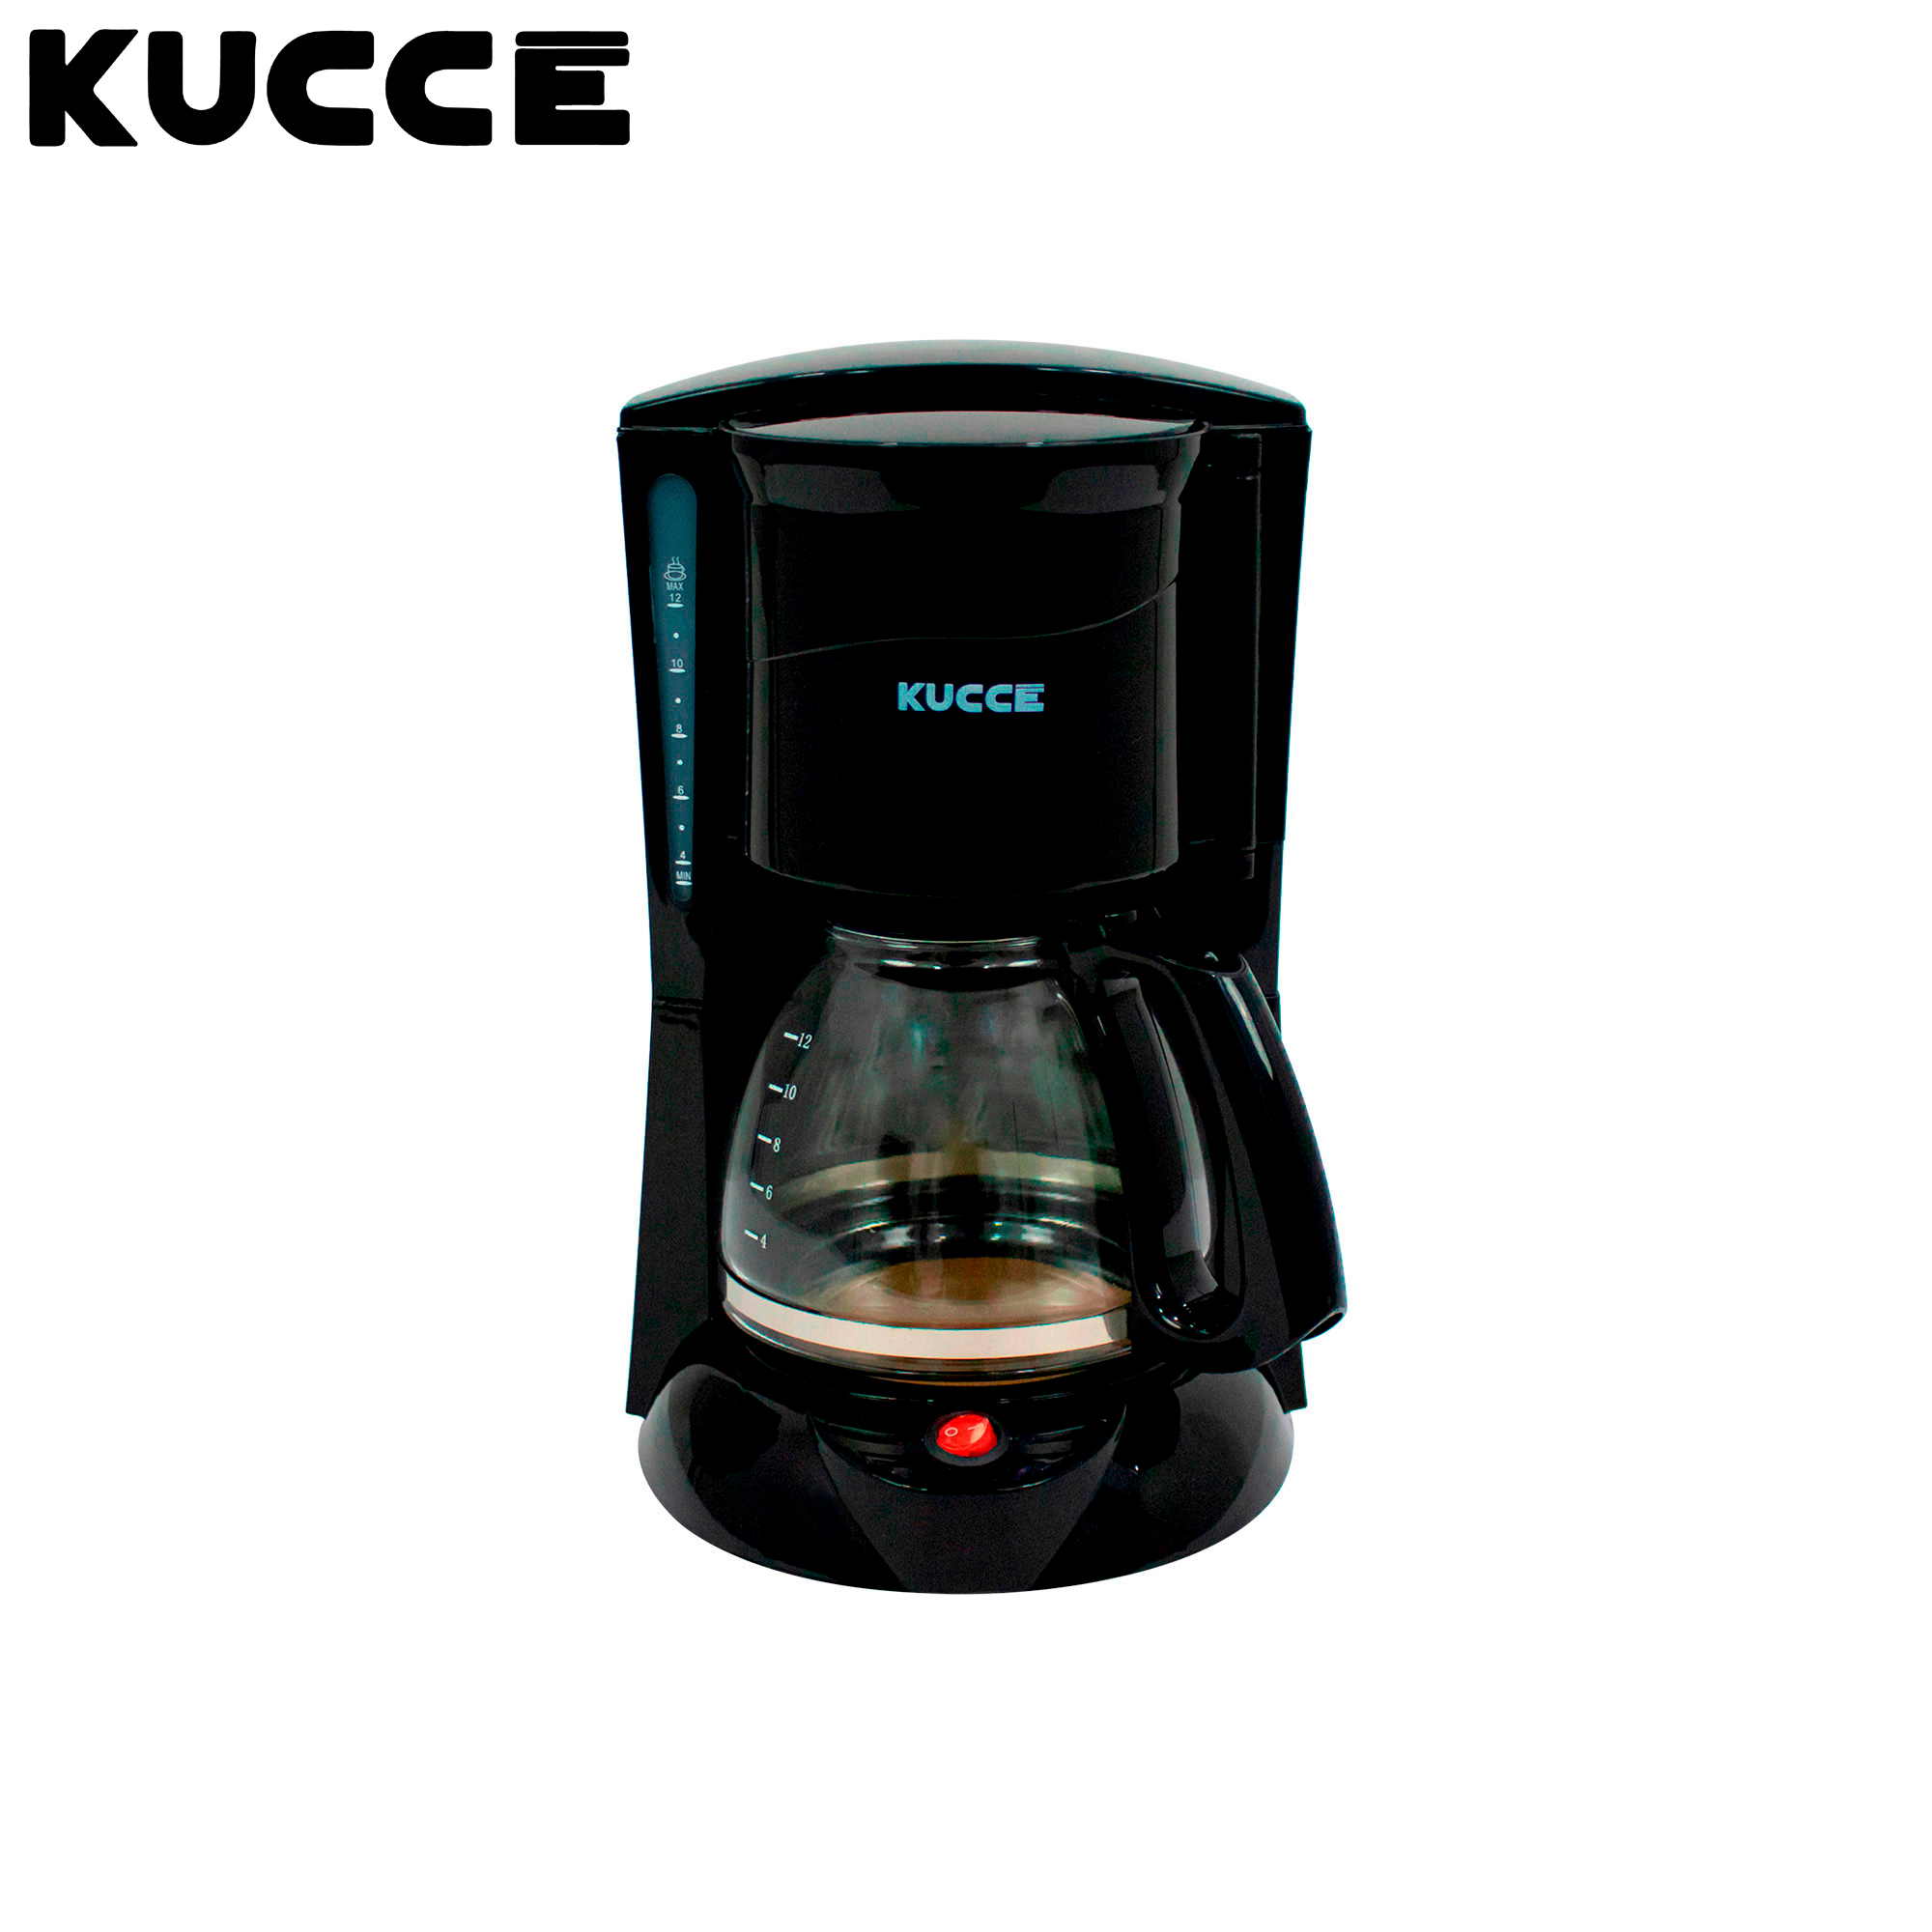 Cafetera Kucce 12 tazas negra - Multimax Store